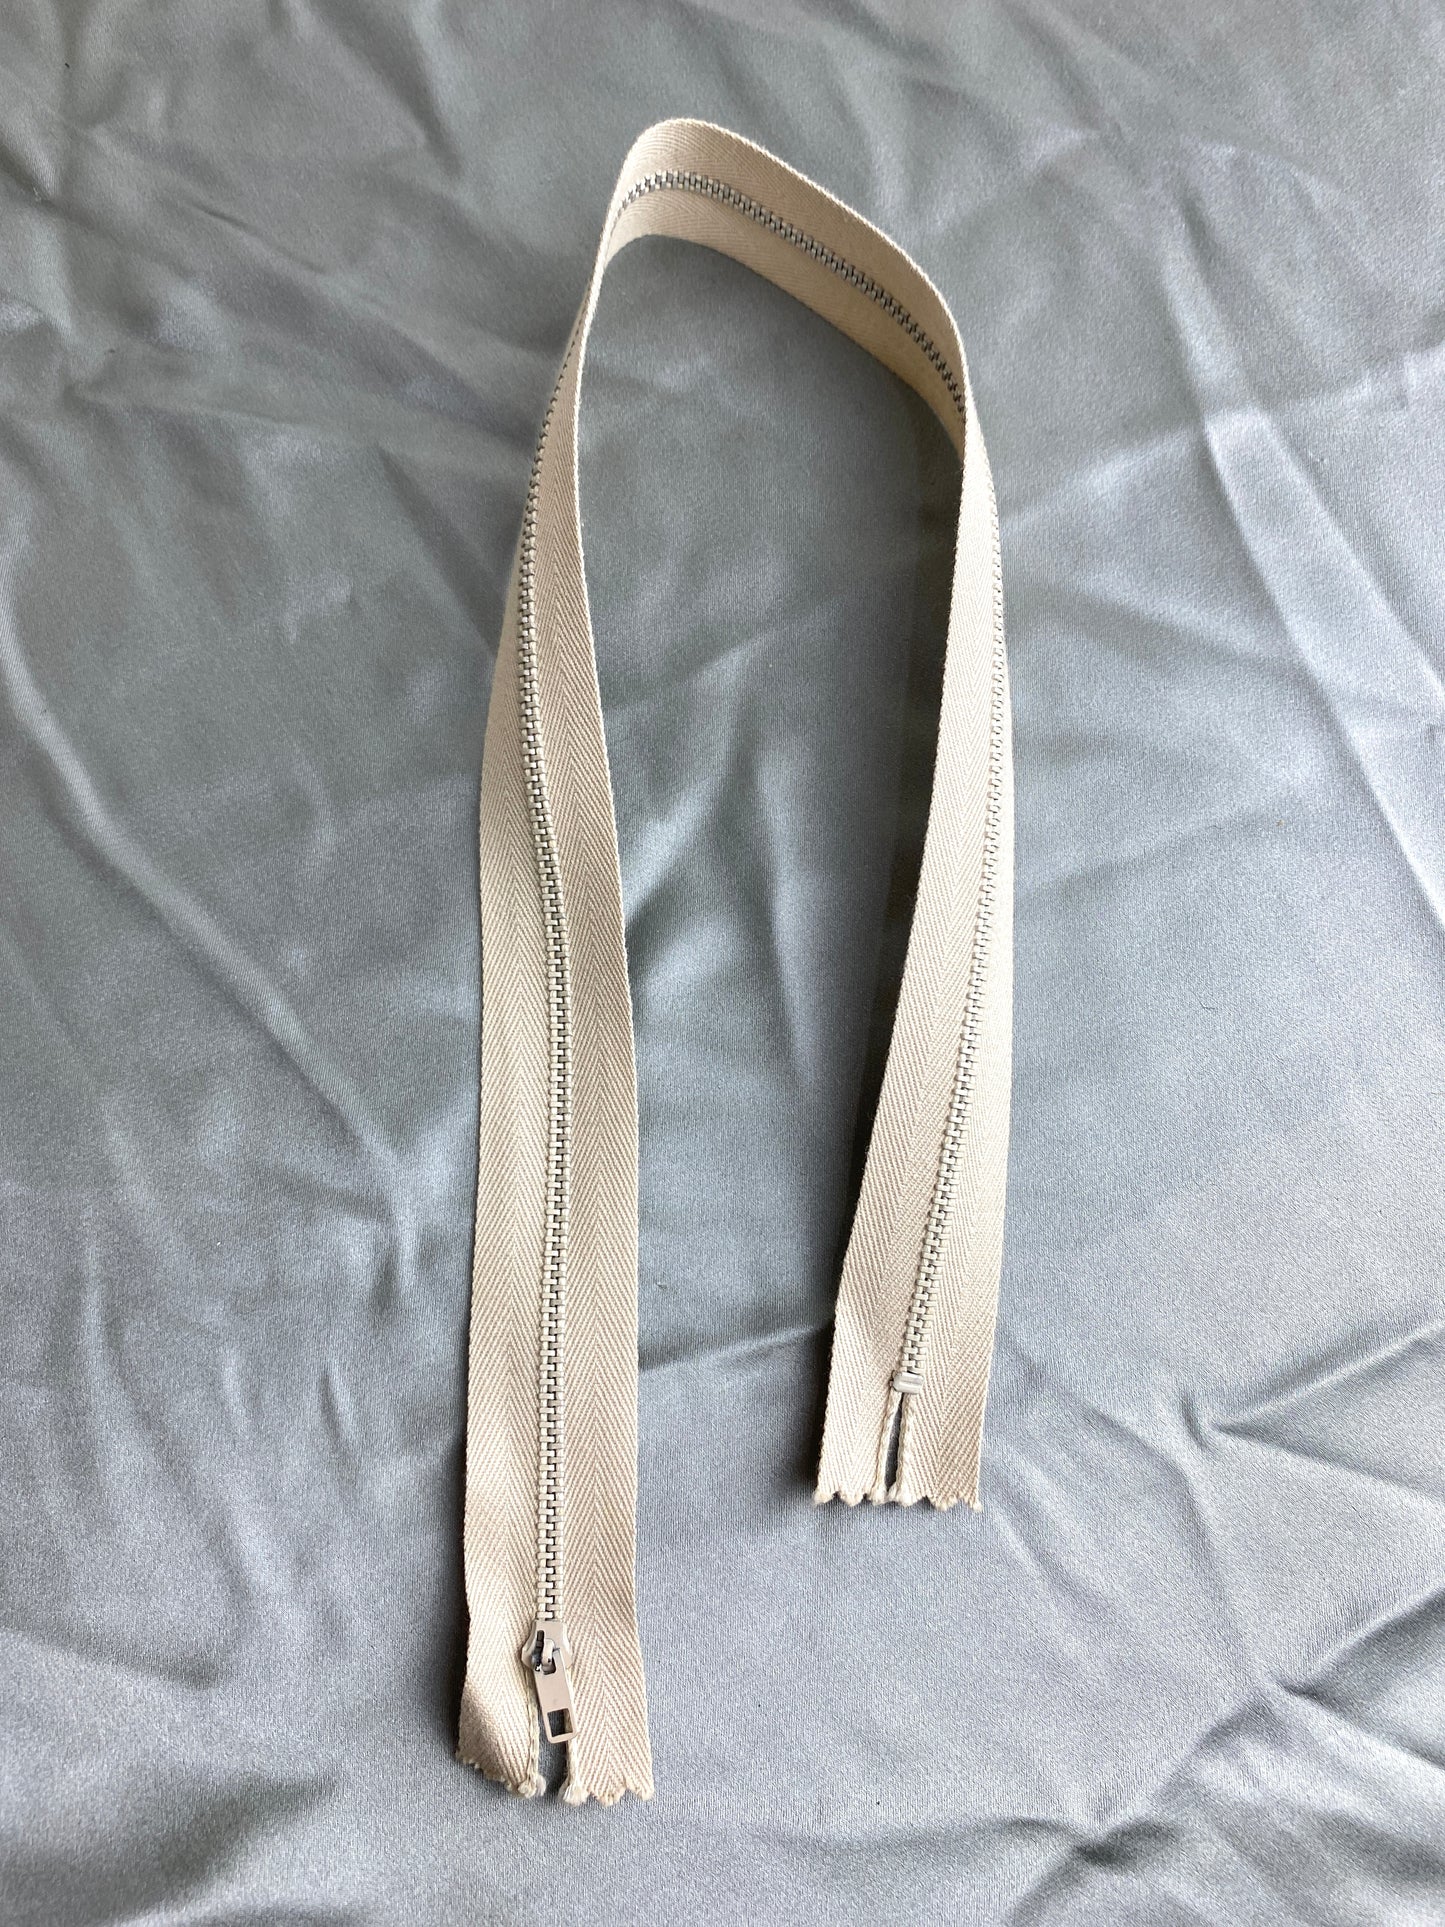 A single light tan vintage metal zipper. Ian Drummond Vintage. 